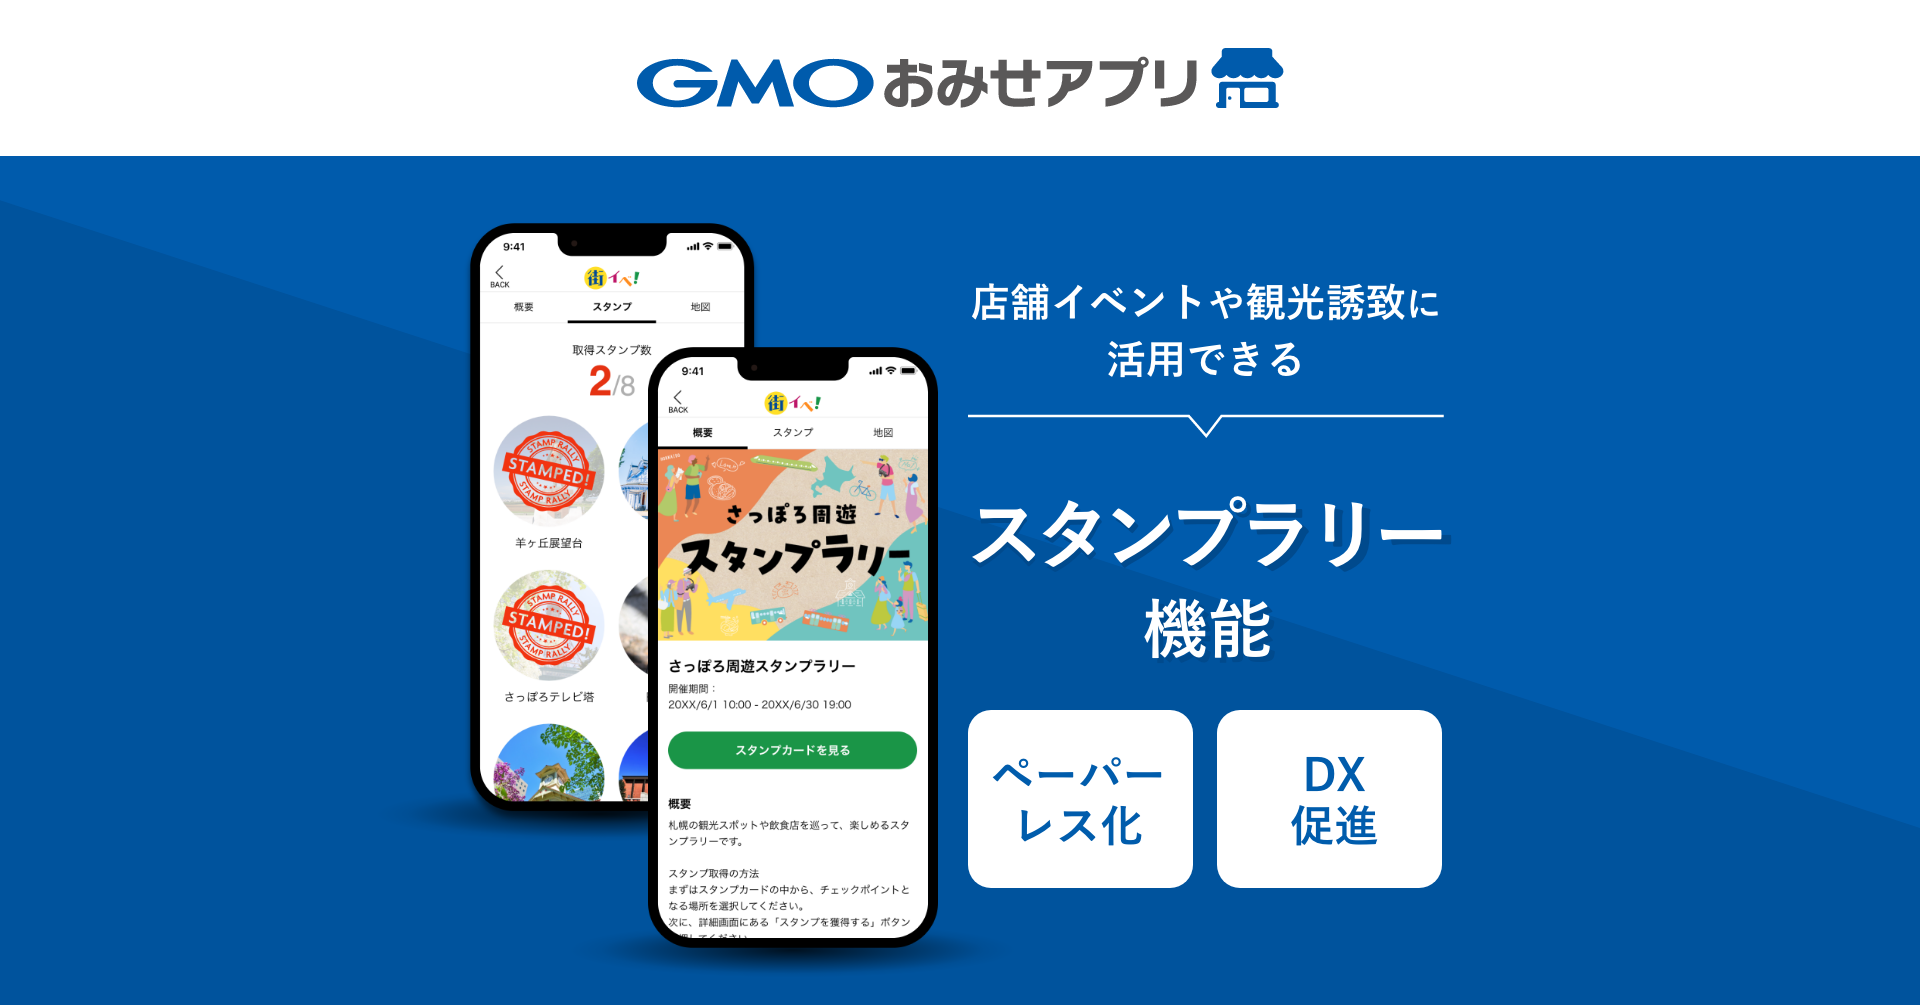 「GMOおみせアプリ」が新機能『スタンプラリー機能』をリリース 観光促進・地域活性化を支援